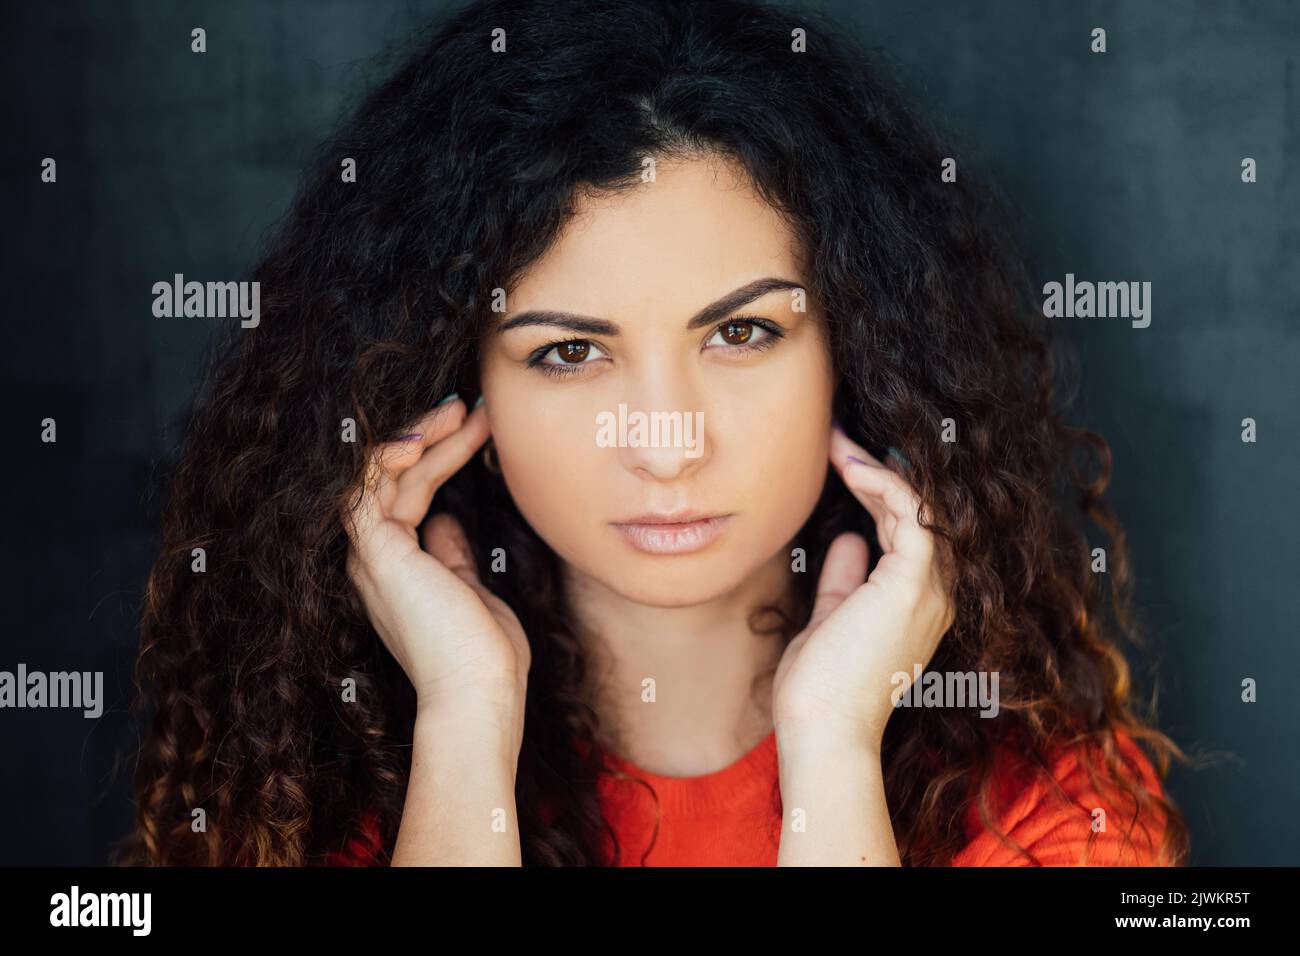 tempting confident emotional lady portrait Stock Photo - Alamy